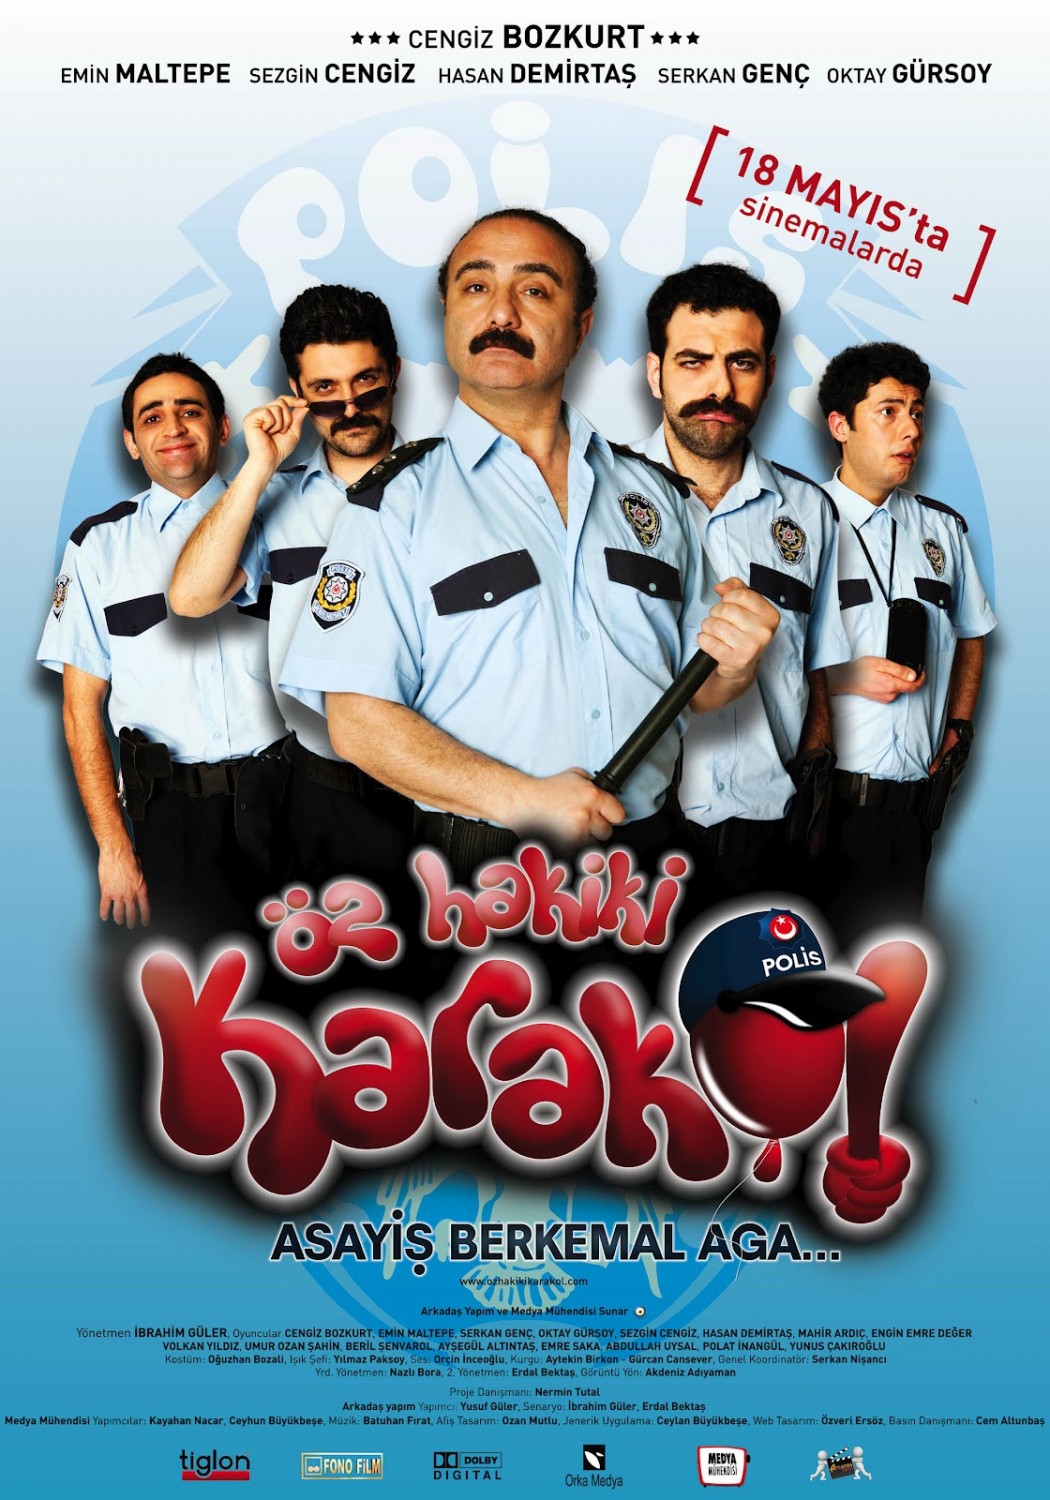 Extra Large Movie Poster Image for Öz Hakiki Karakol: Asayis Berkemal Aga... 